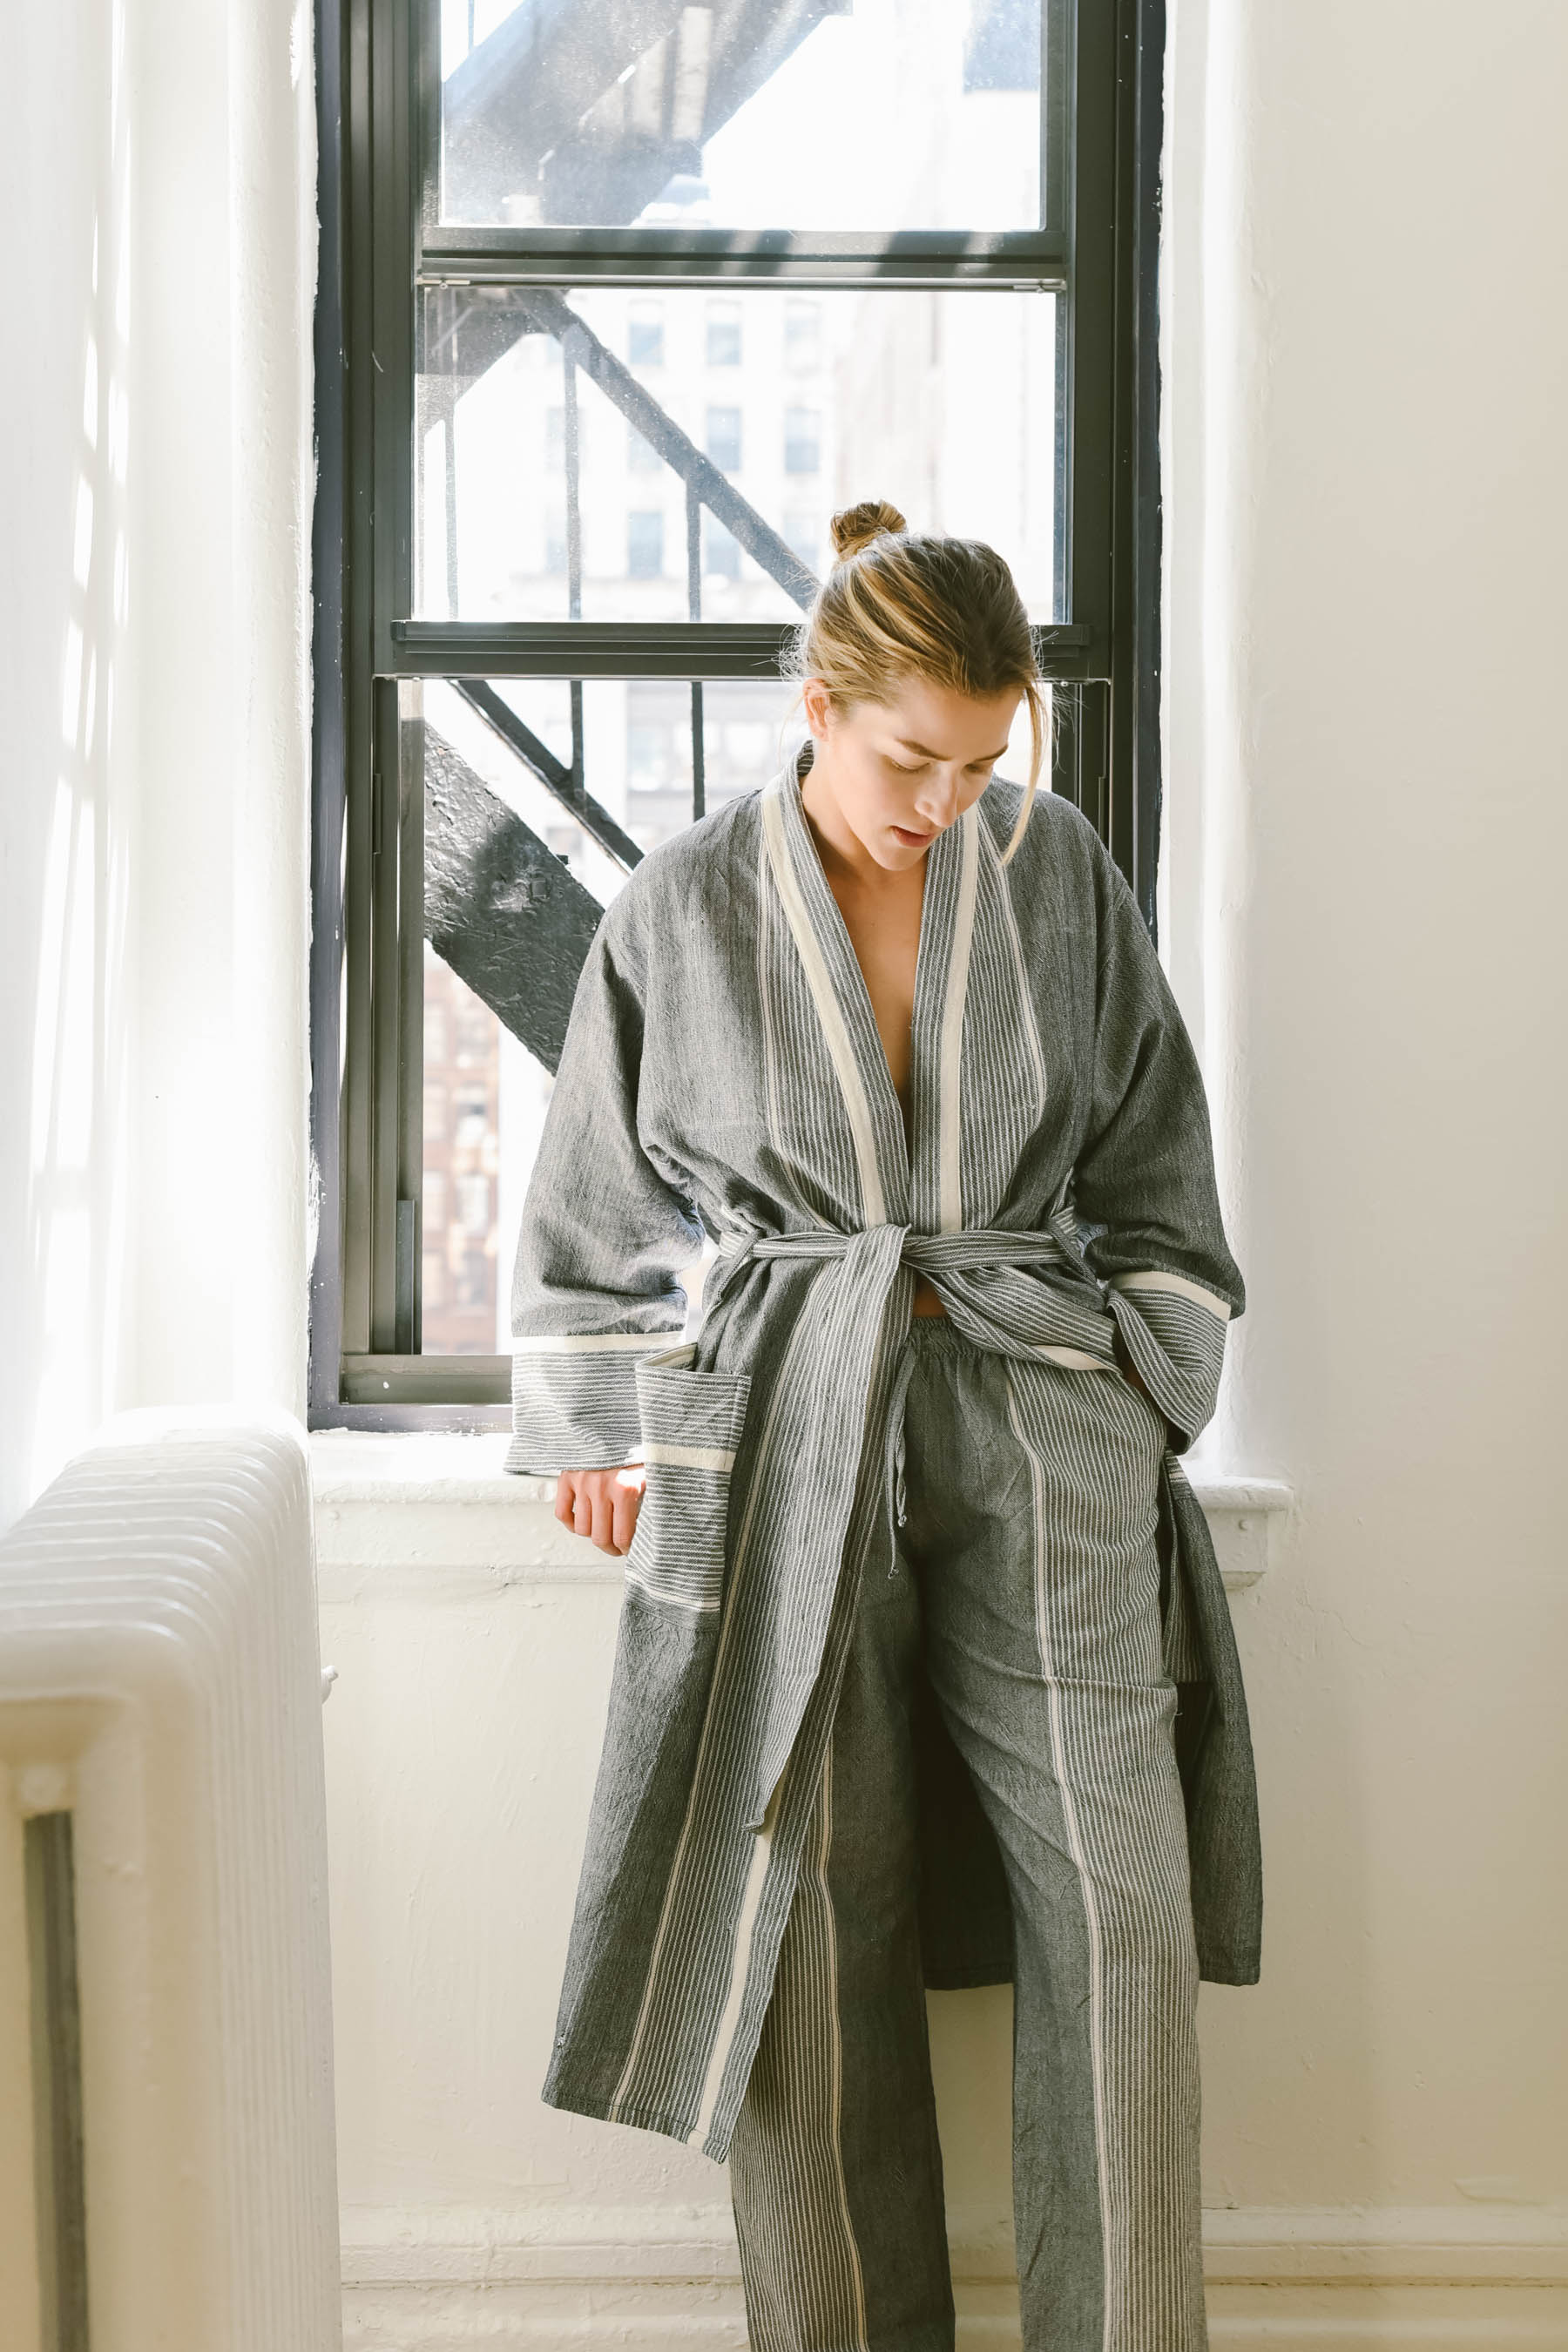 Grey Stripe Tribeca Hand Towel – Home & Loft